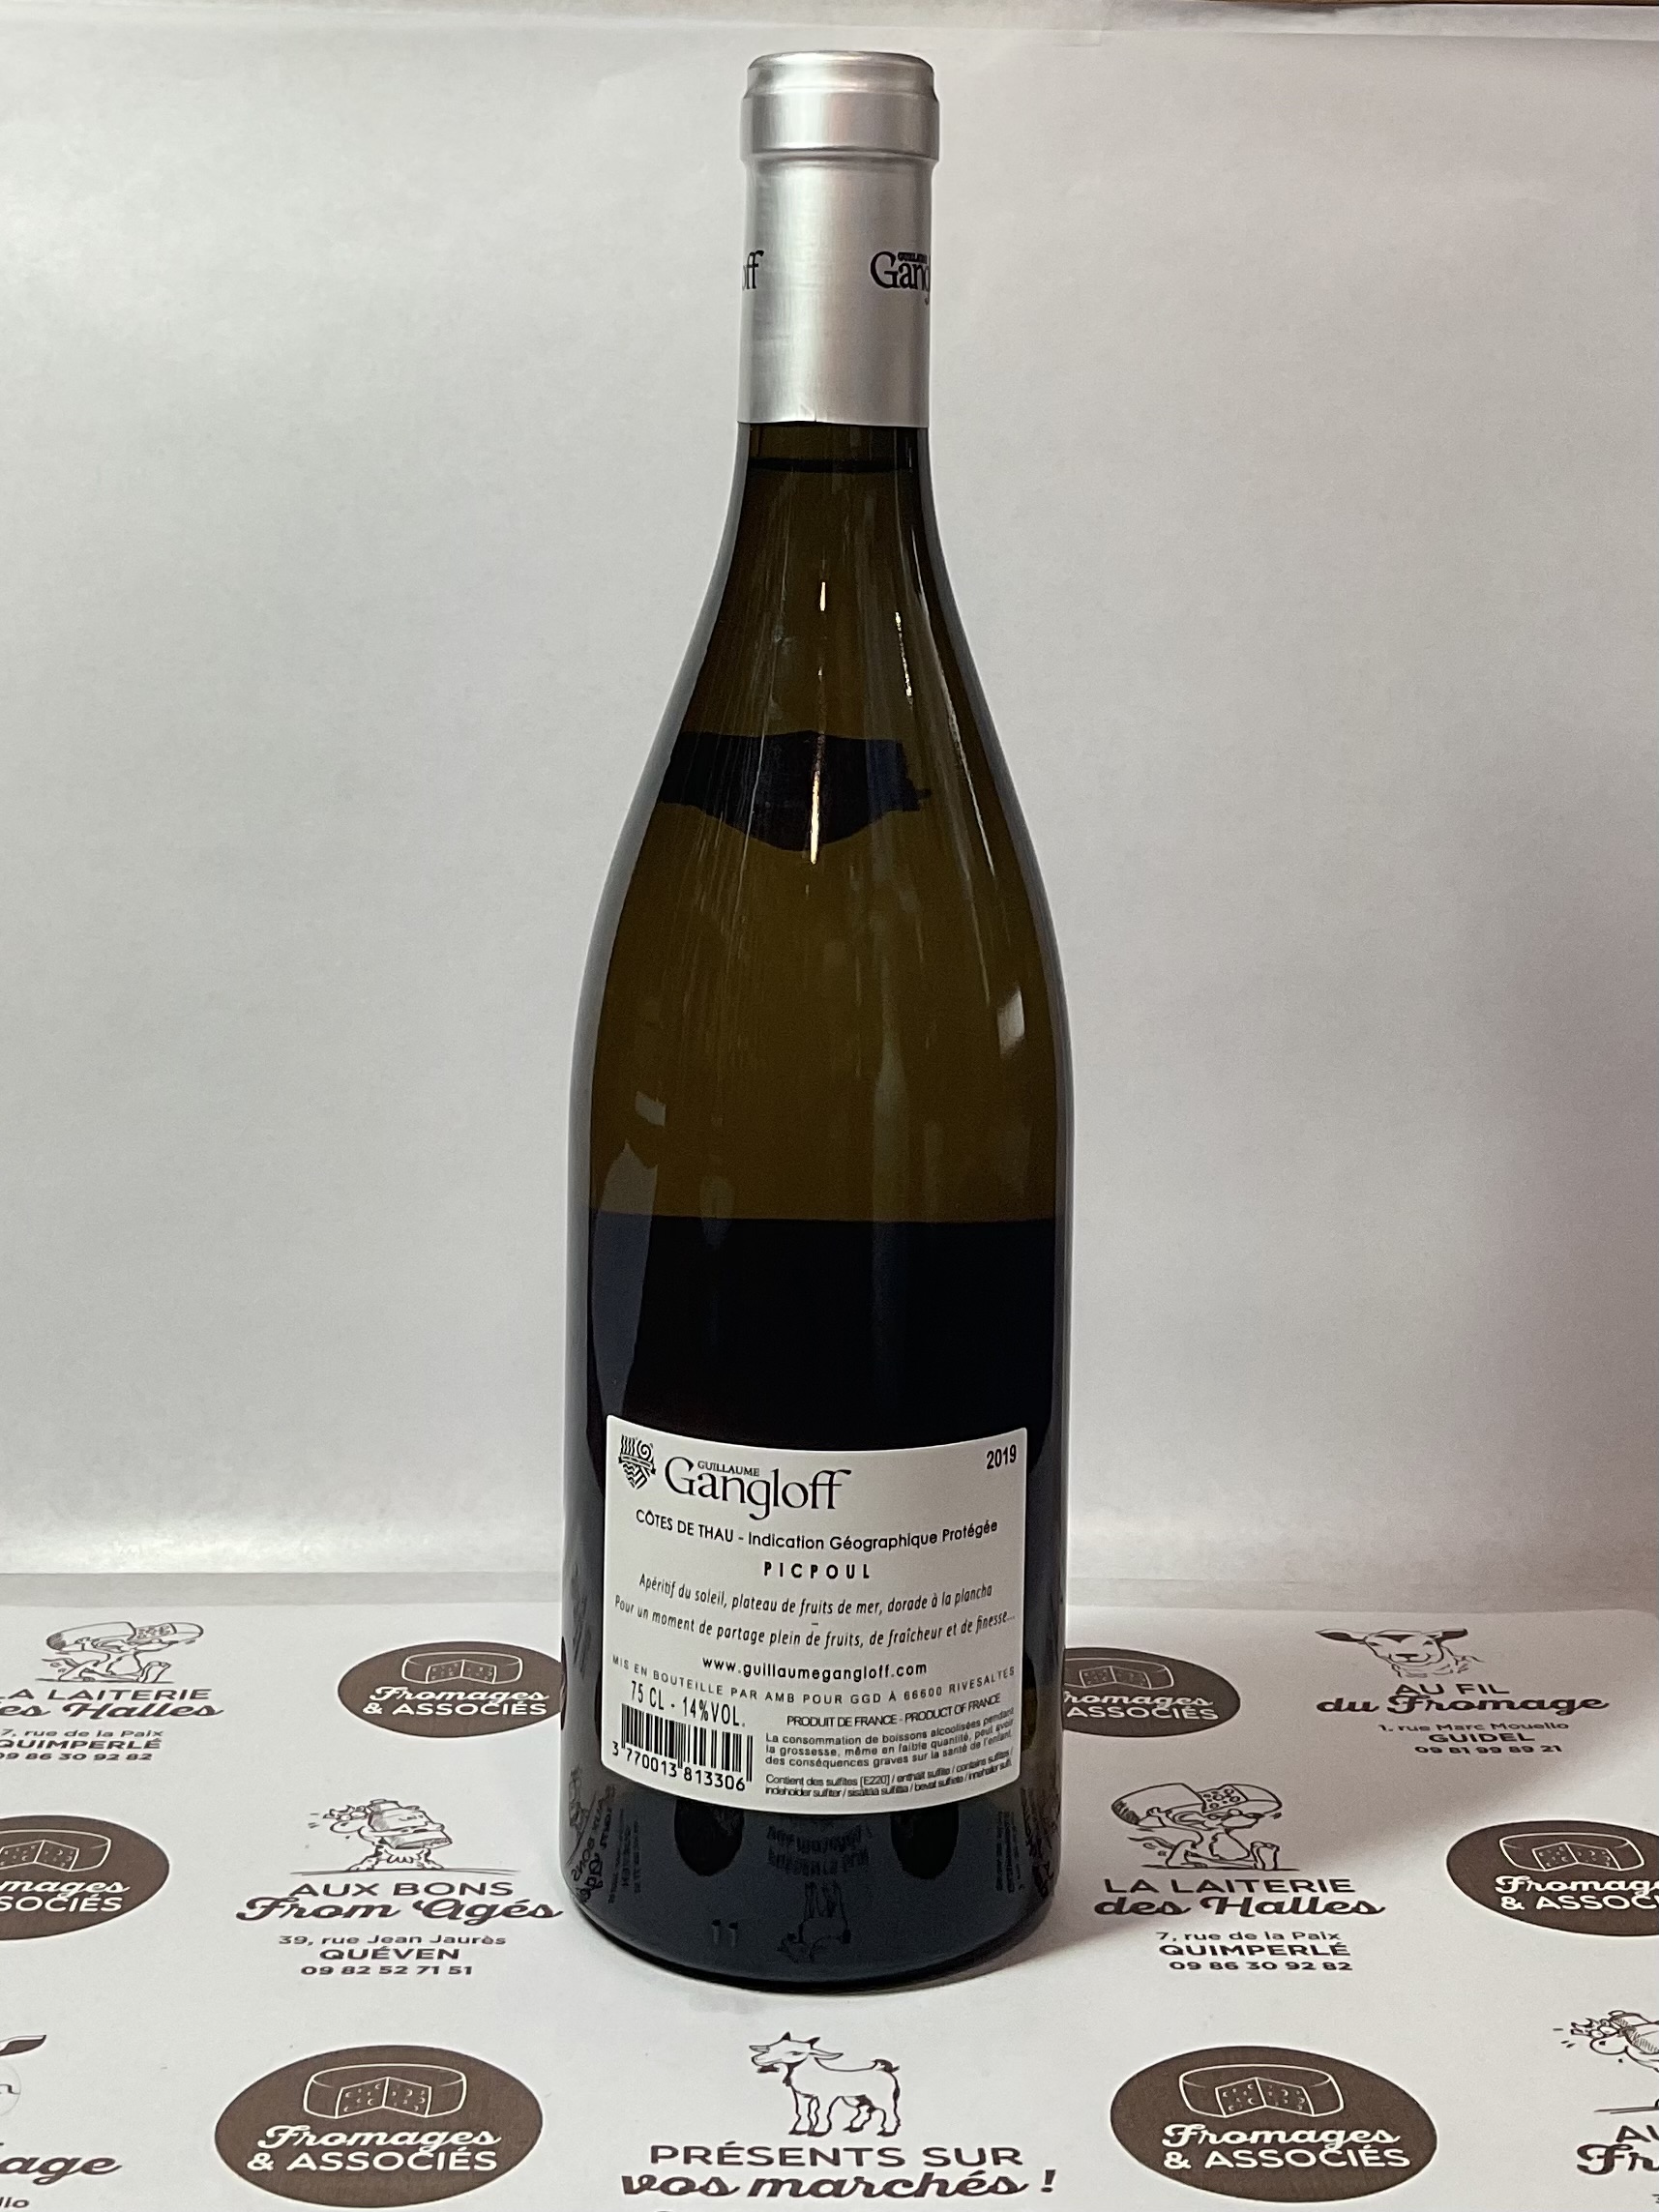 bouteille de vin blanc Nostra gangloff 2019